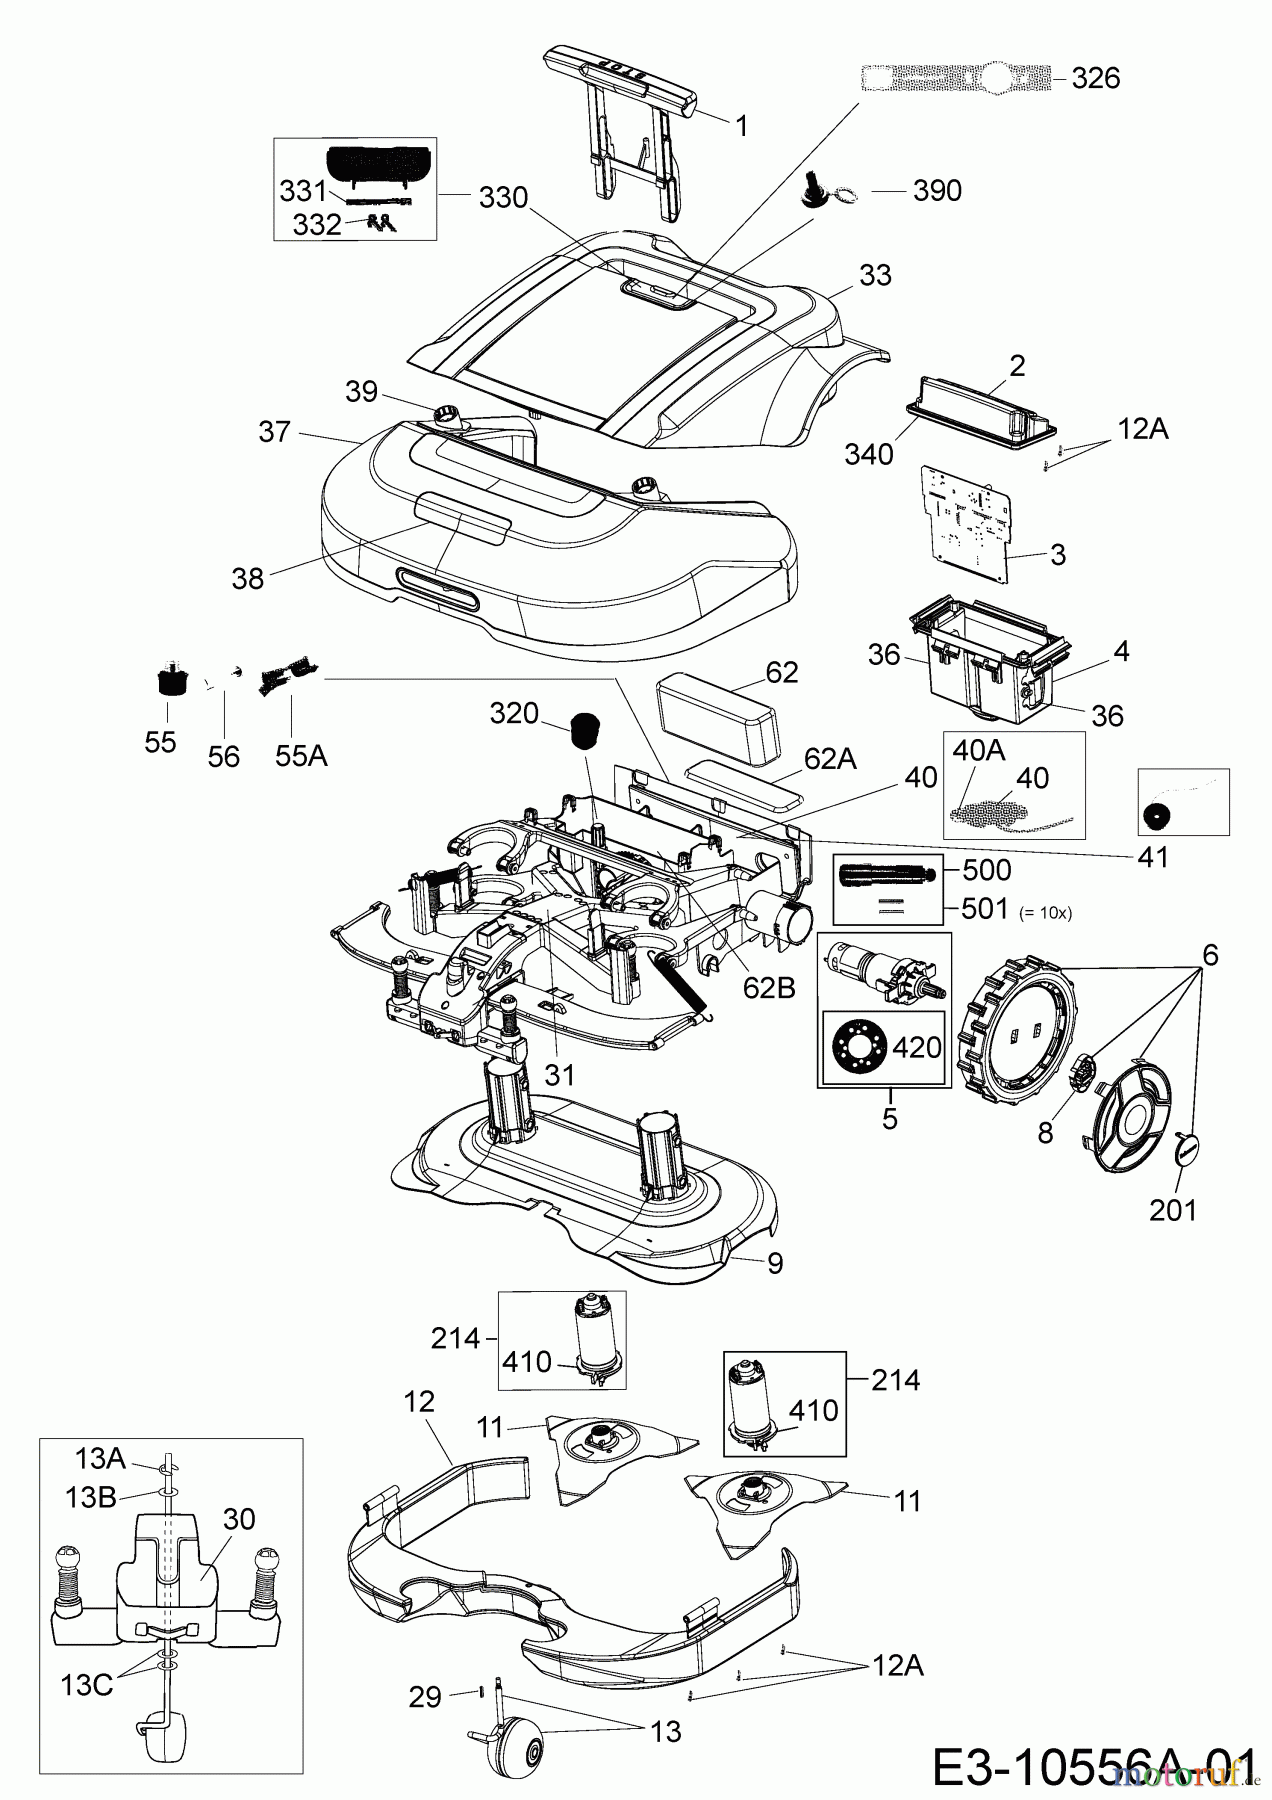  Robomow Robotic lawn mower MS 1000 PRD6100Y  (2014) Basic machine